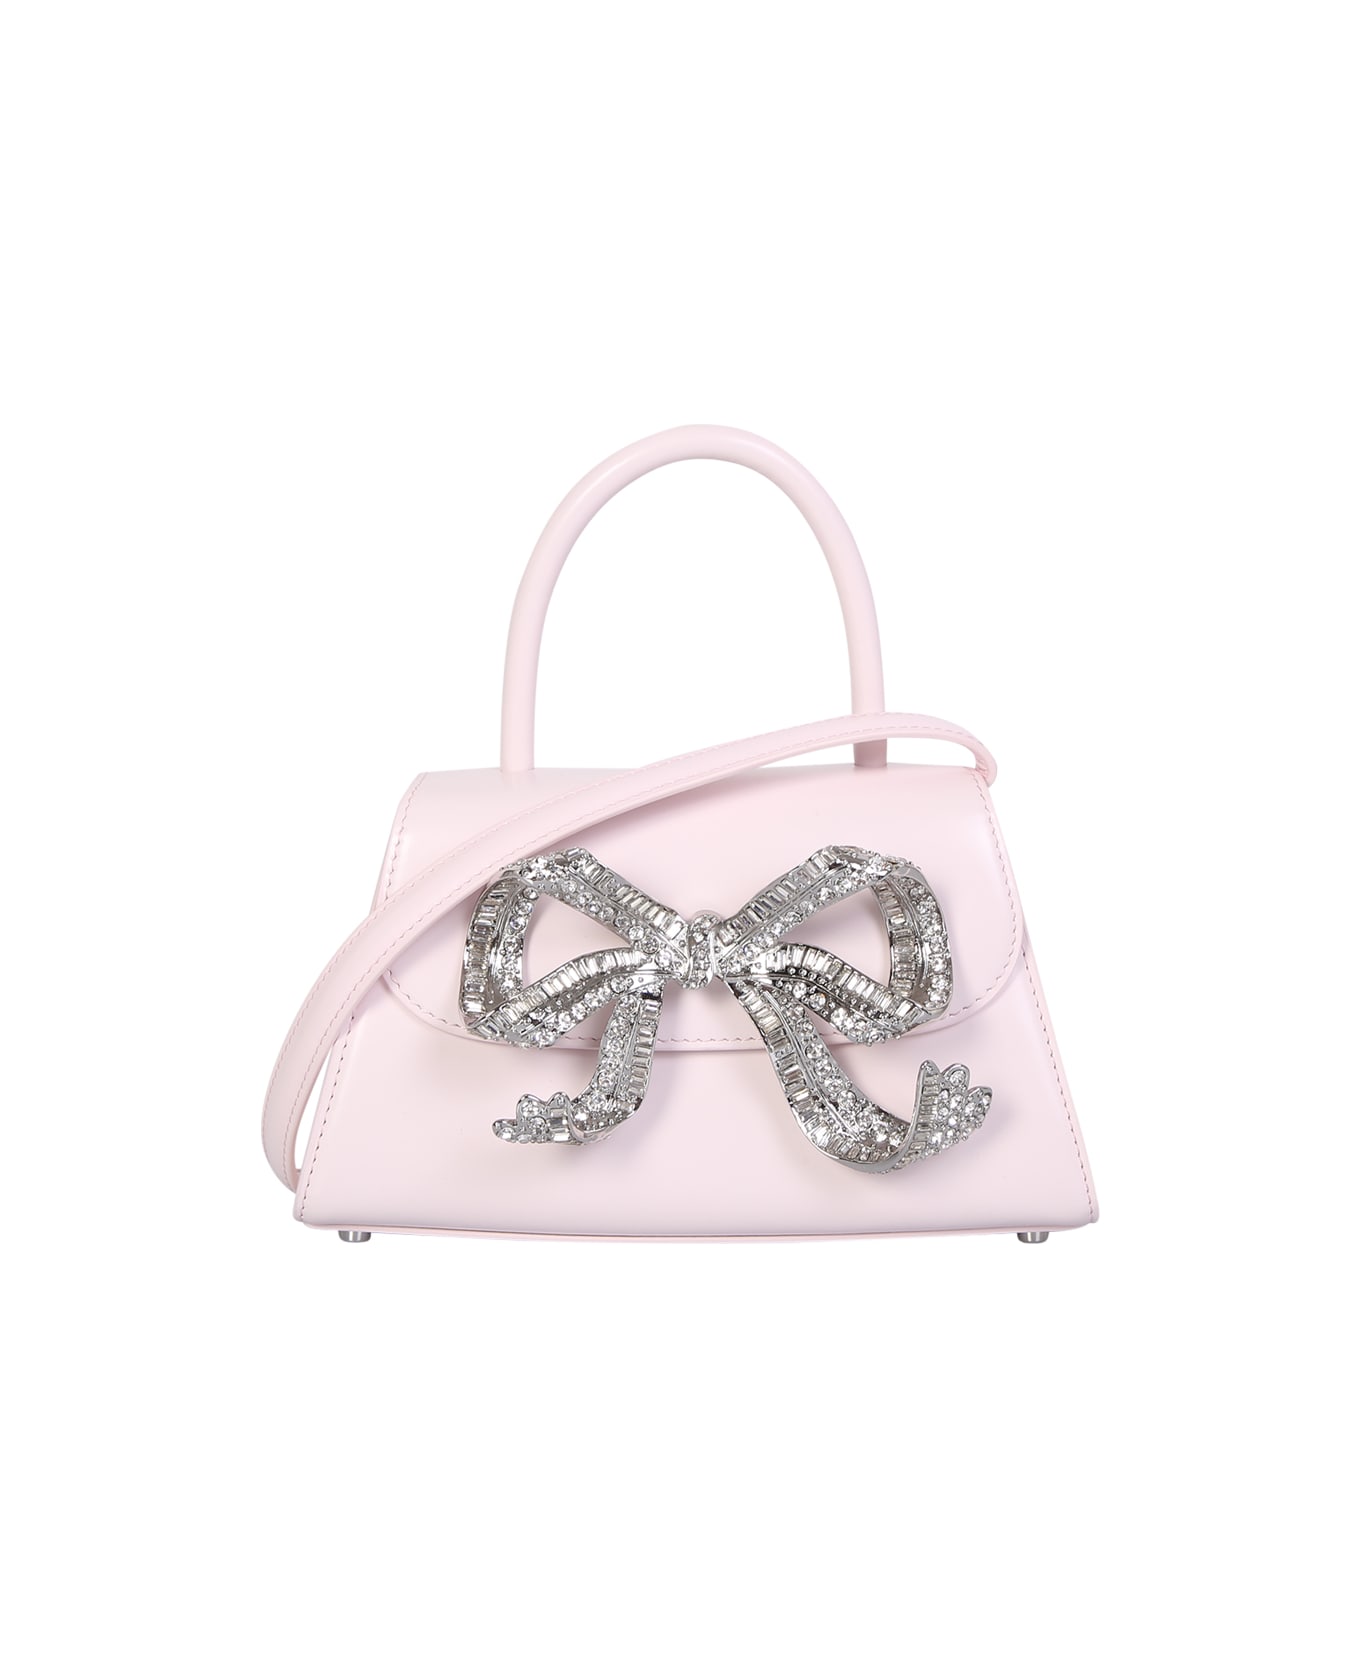 self-portrait 'the Bow' Mini Handbag - Light pink